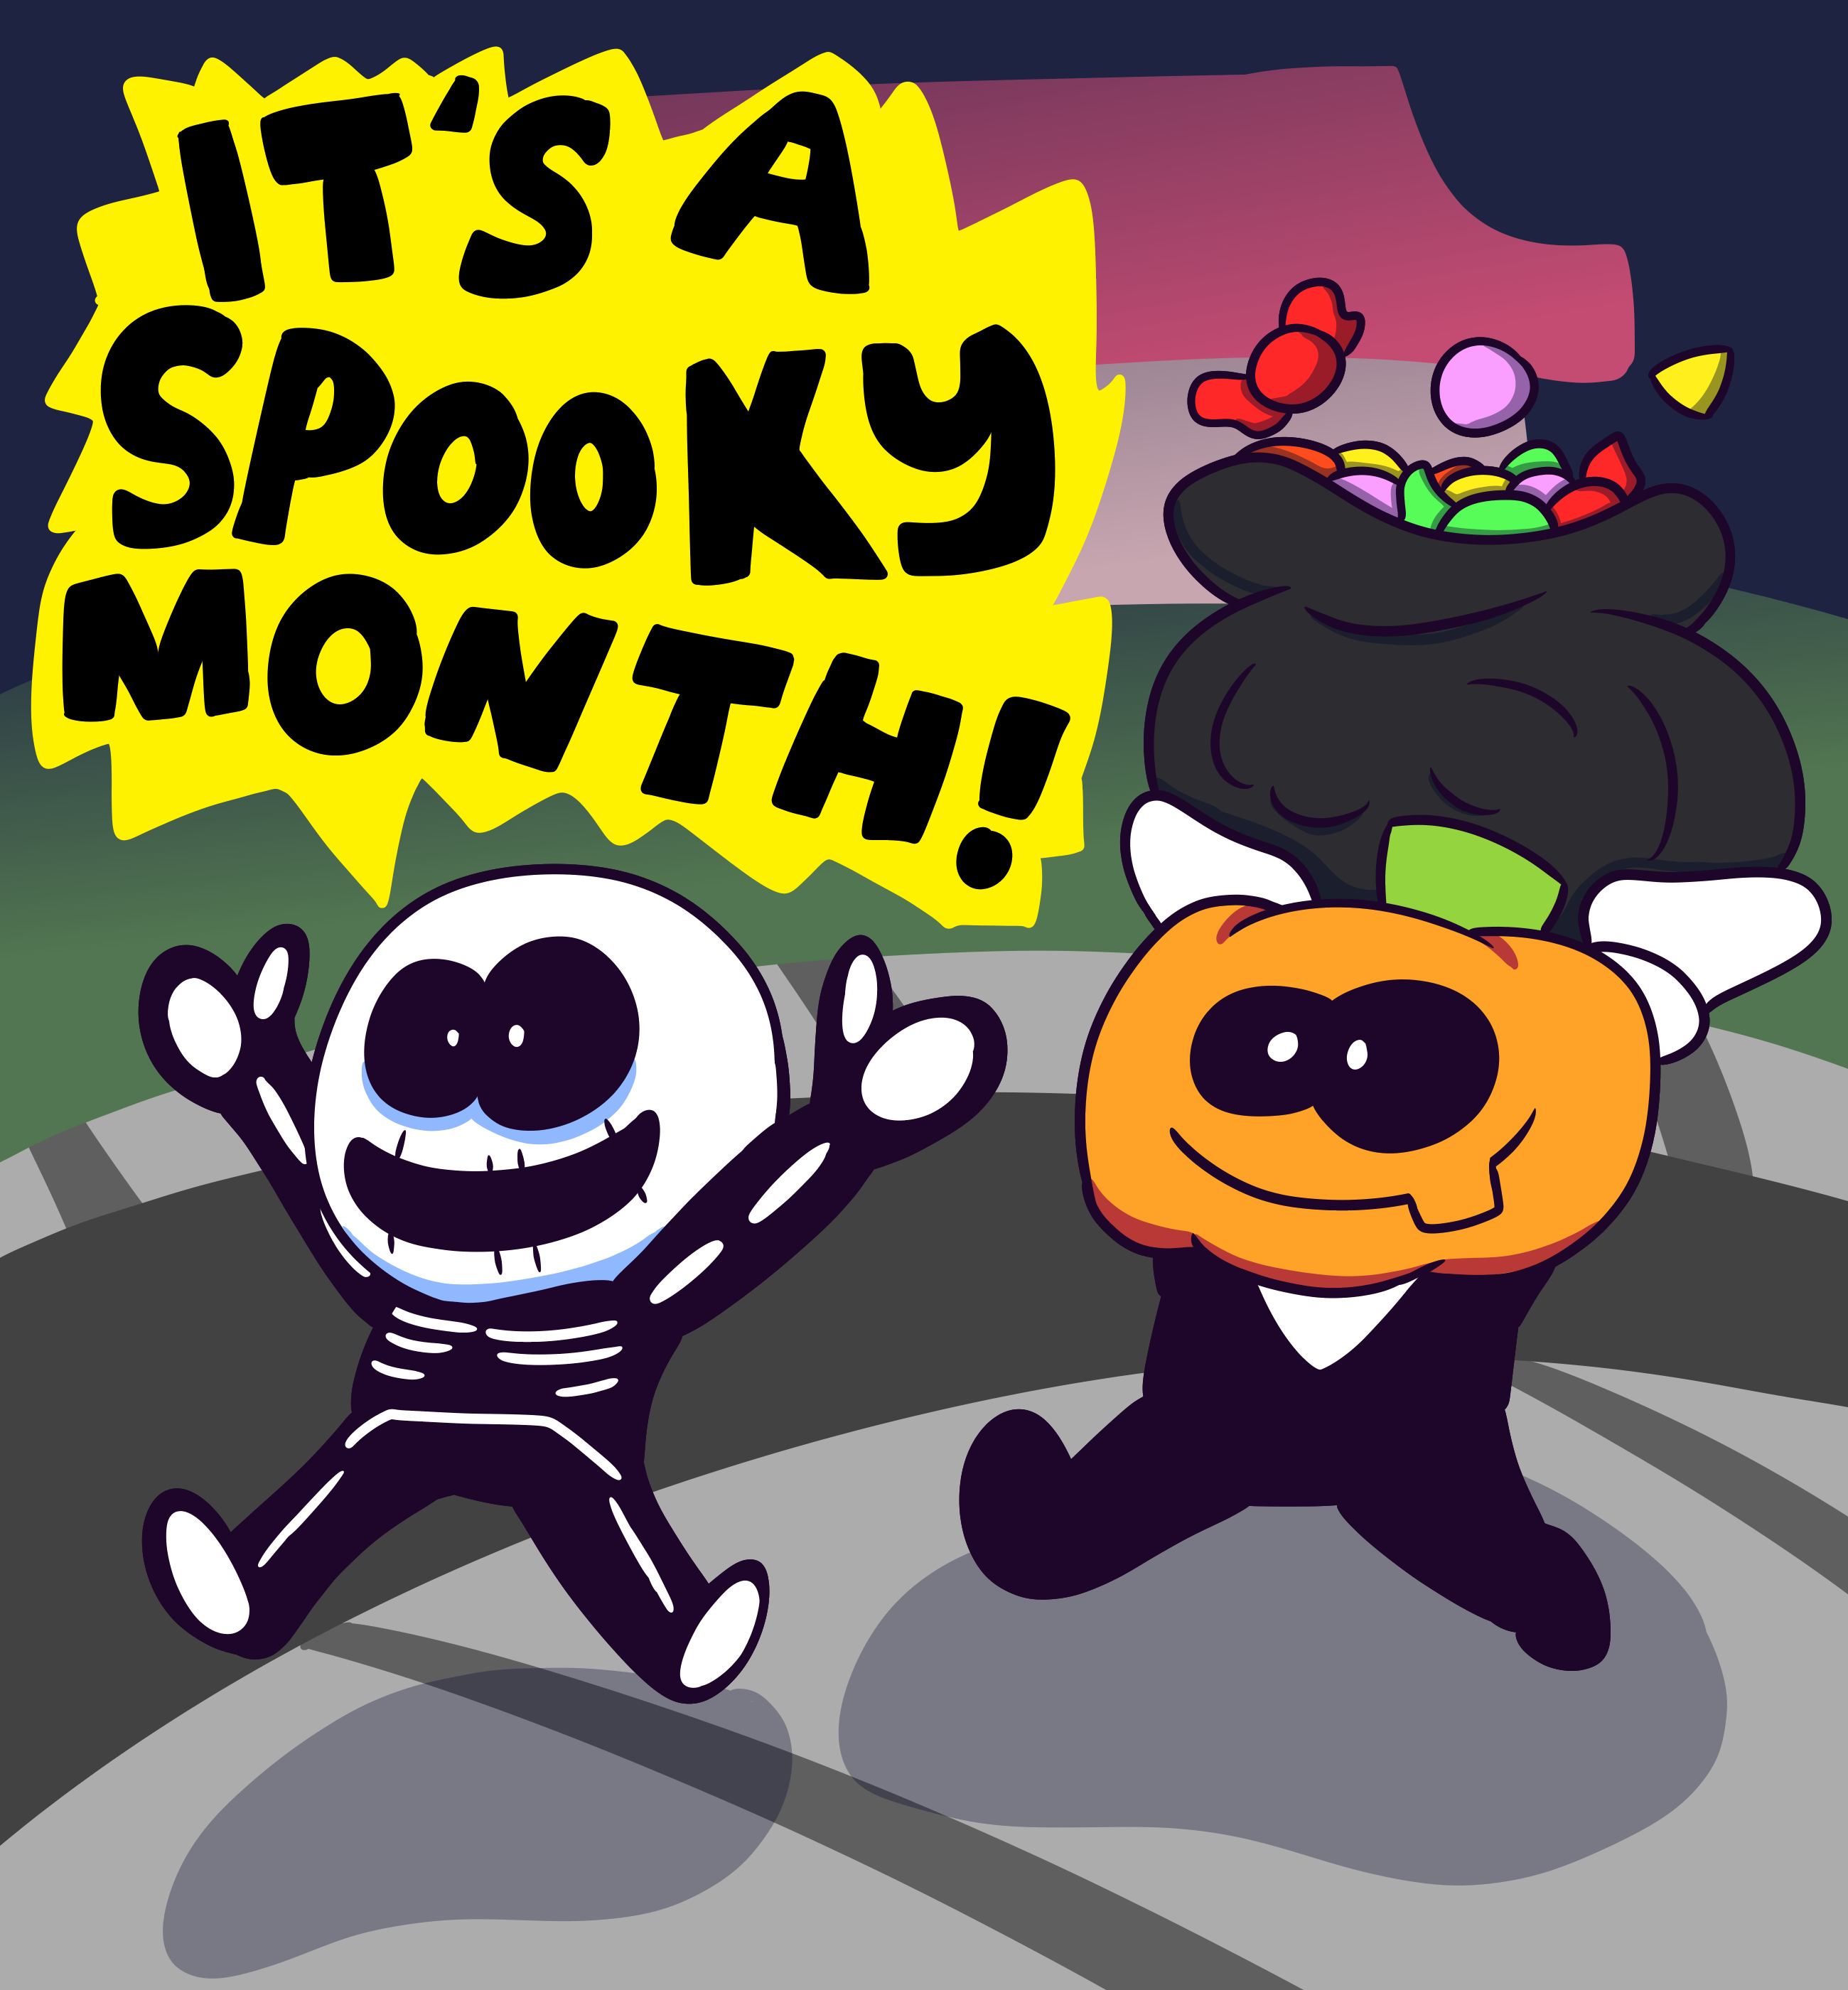 Steamin yhteisö :: :: Spooky month